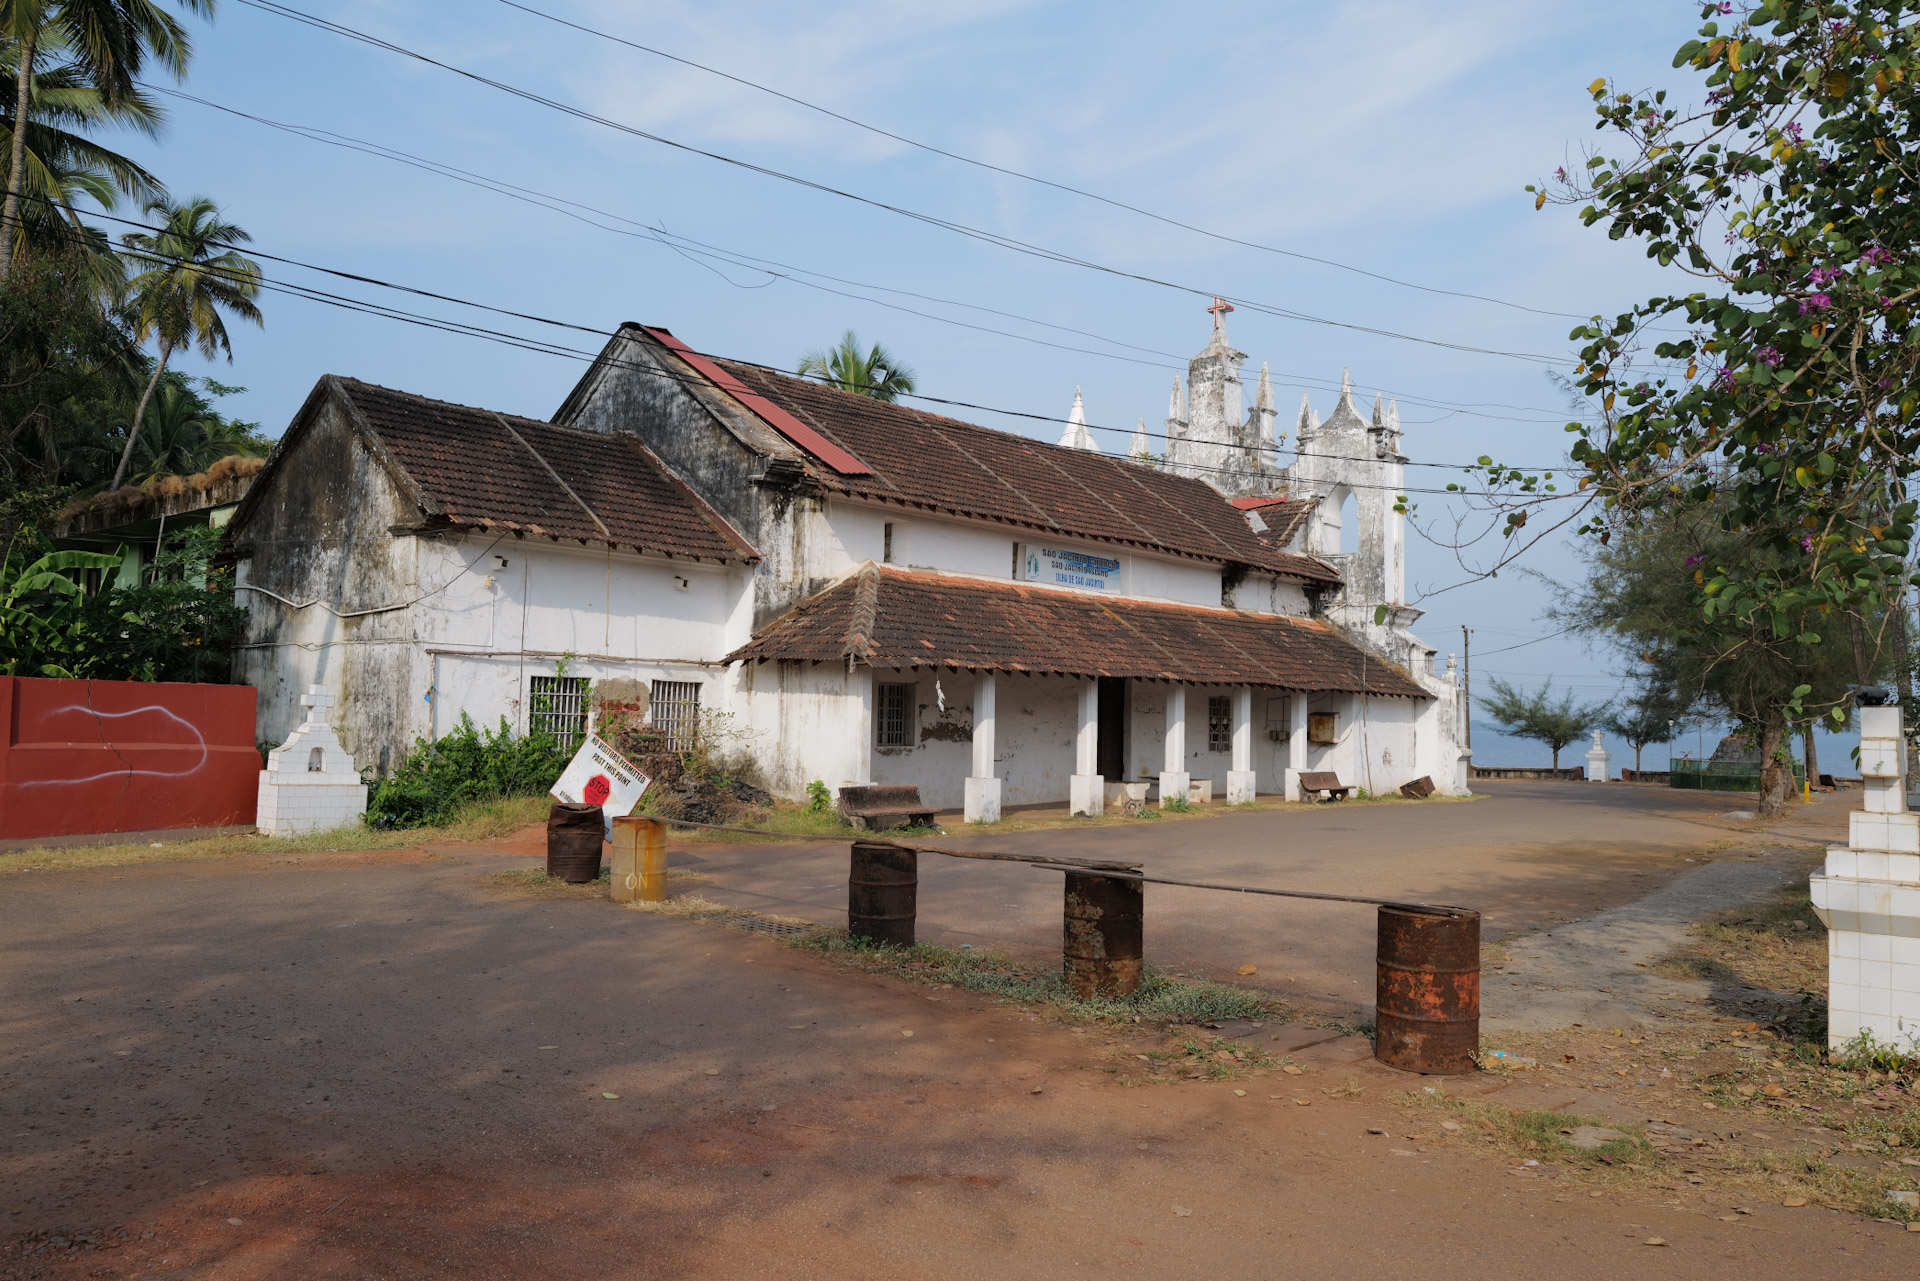 Sāo Jacinto Kirche auf der Insel Sāo Jacinto